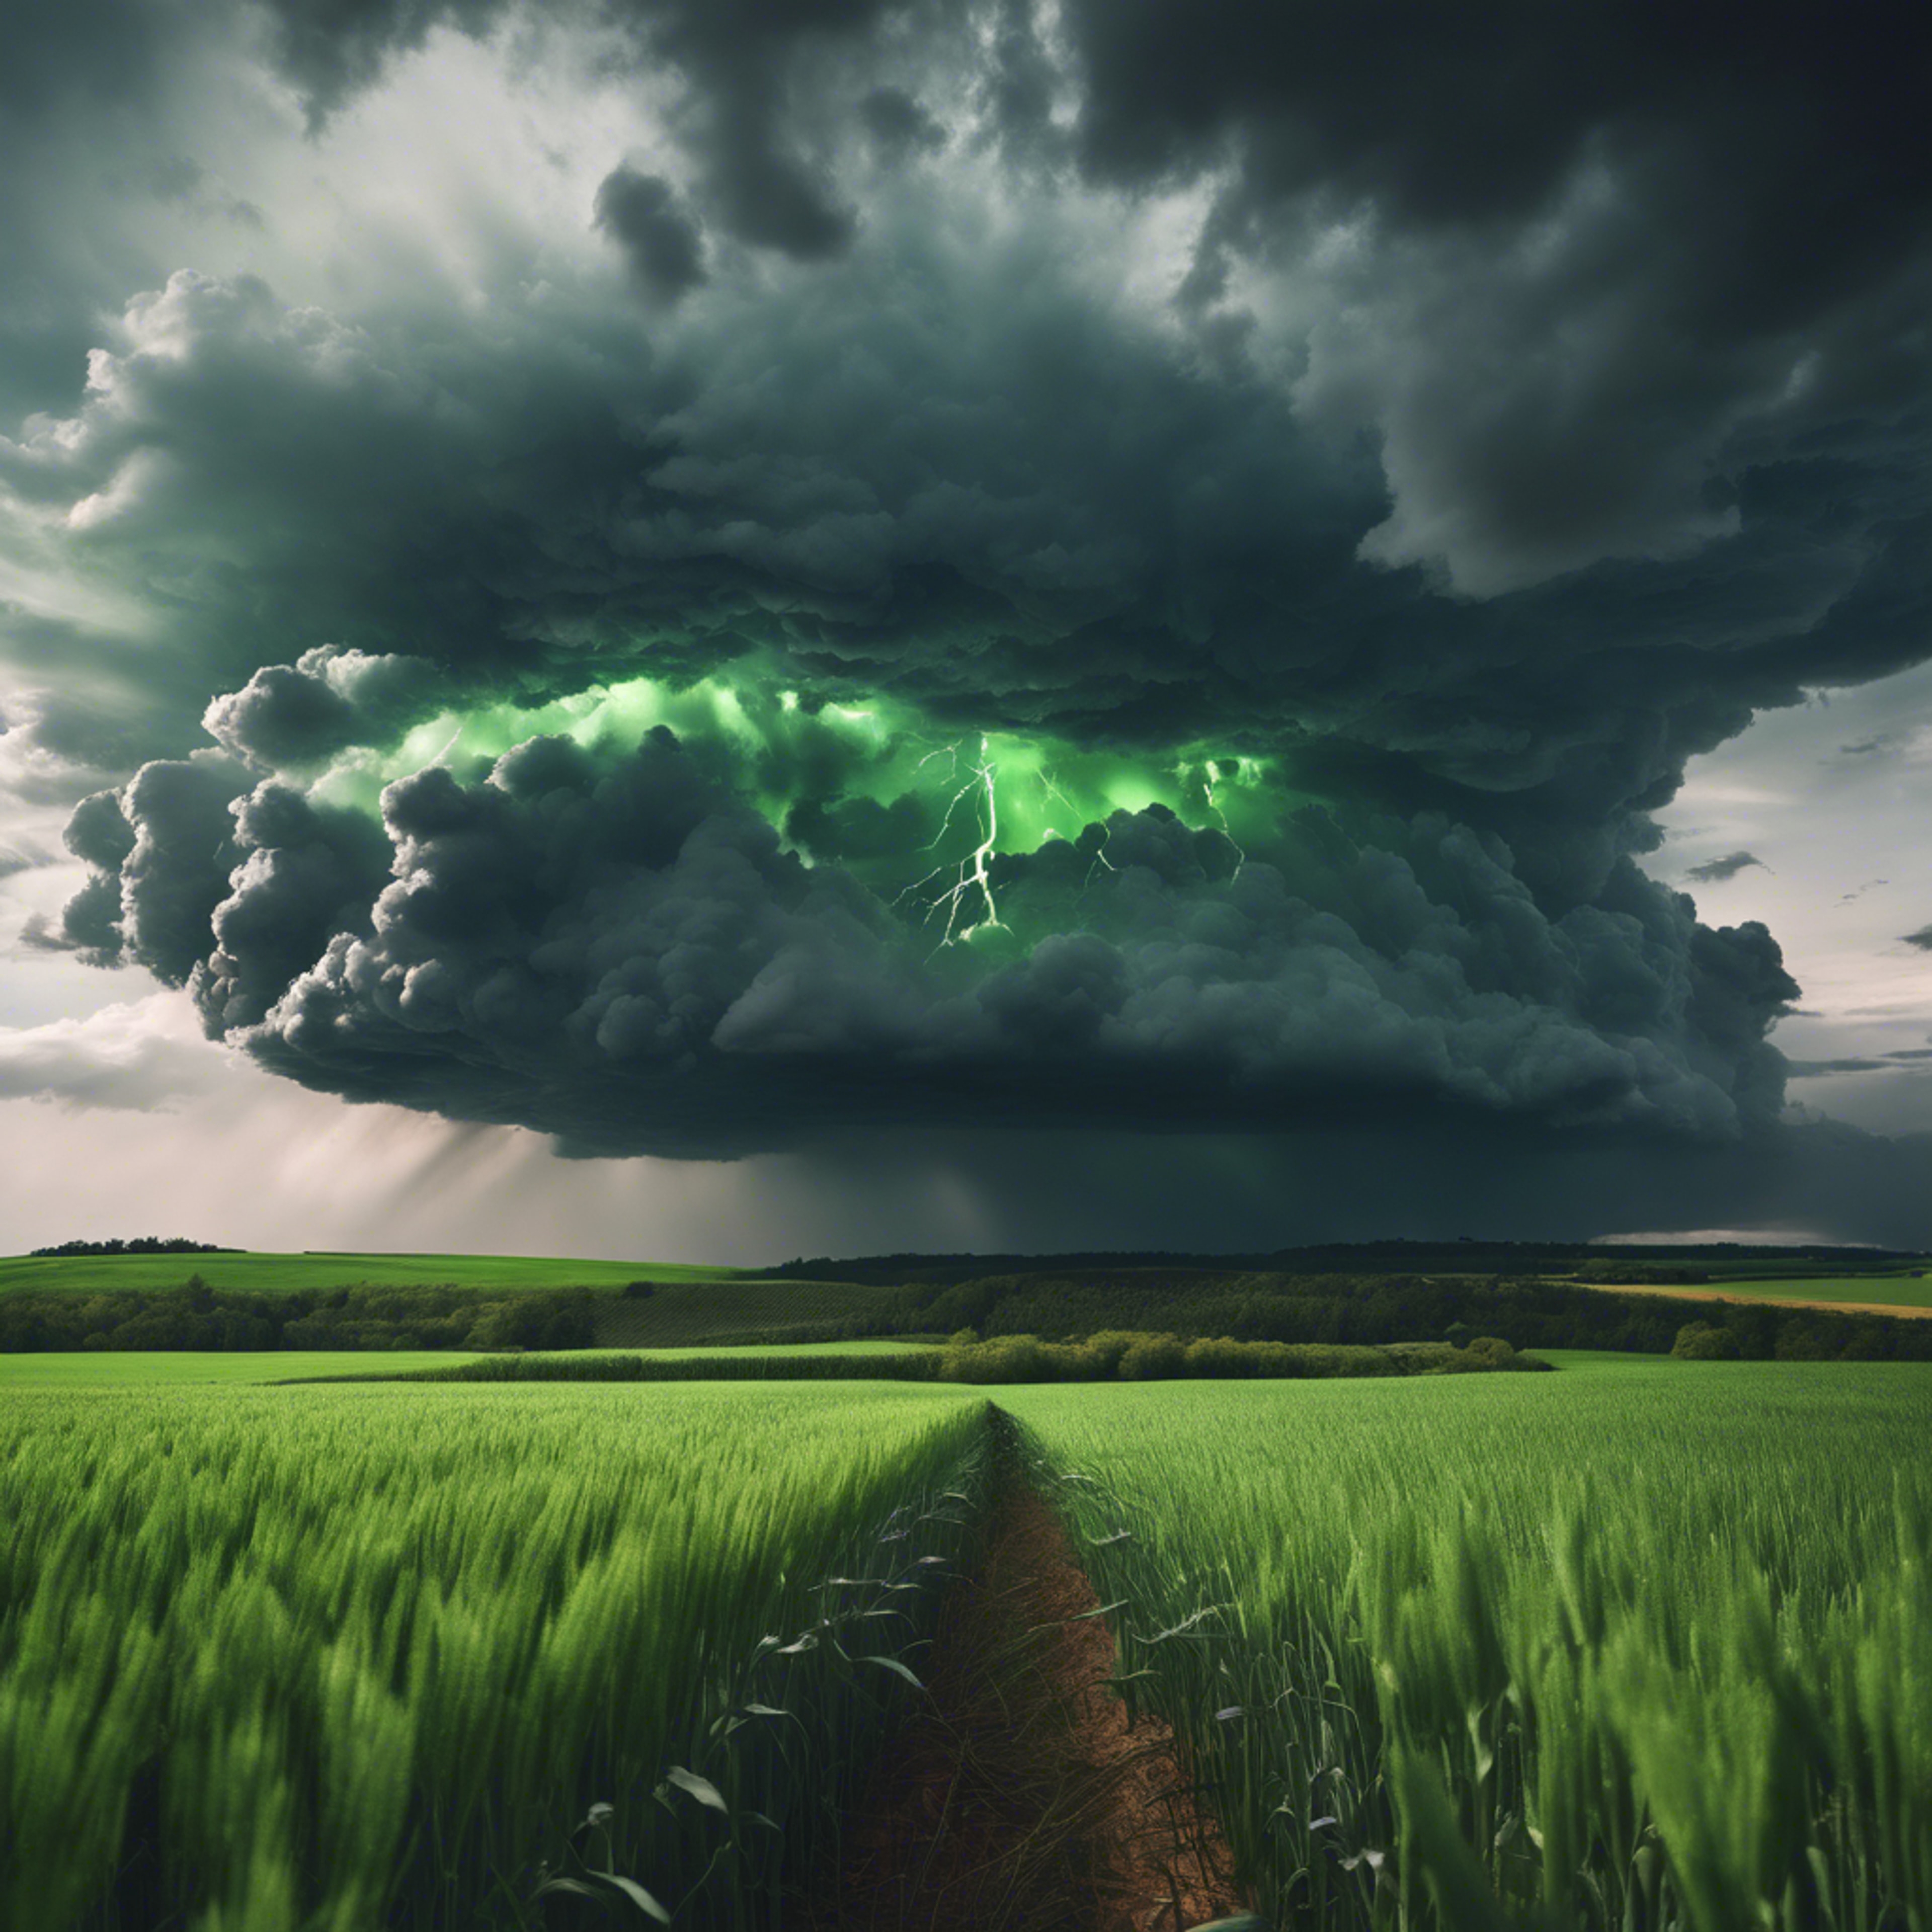 A dramatic black storm cloud over a vibrant green wheat field. Tapeta na zeď[2ef08a34070042519f8d]